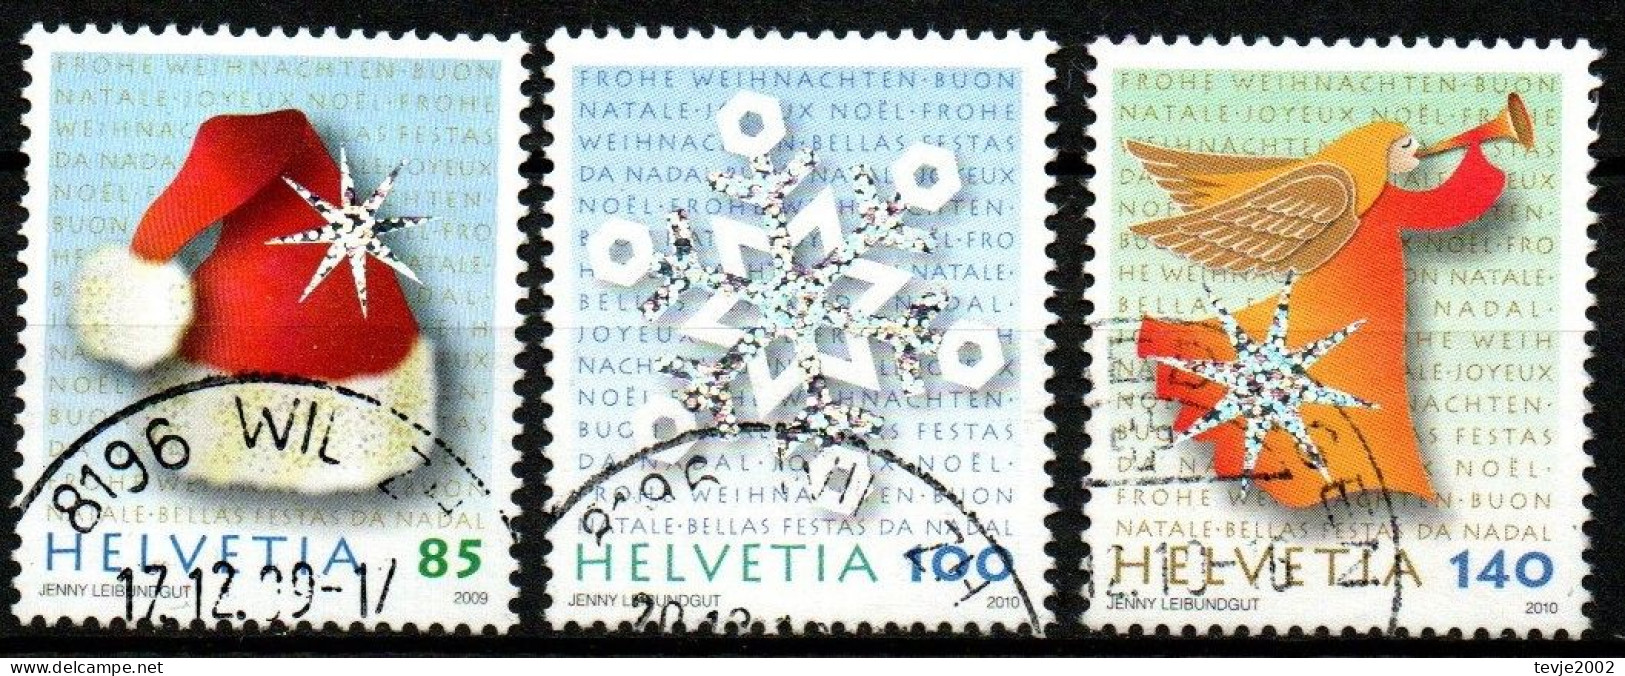 Schweiz 2009 - Mi.Nr. 2127 - 2129 - Gestempelt Used - Weihnachten Christmas Noel - Used Stamps